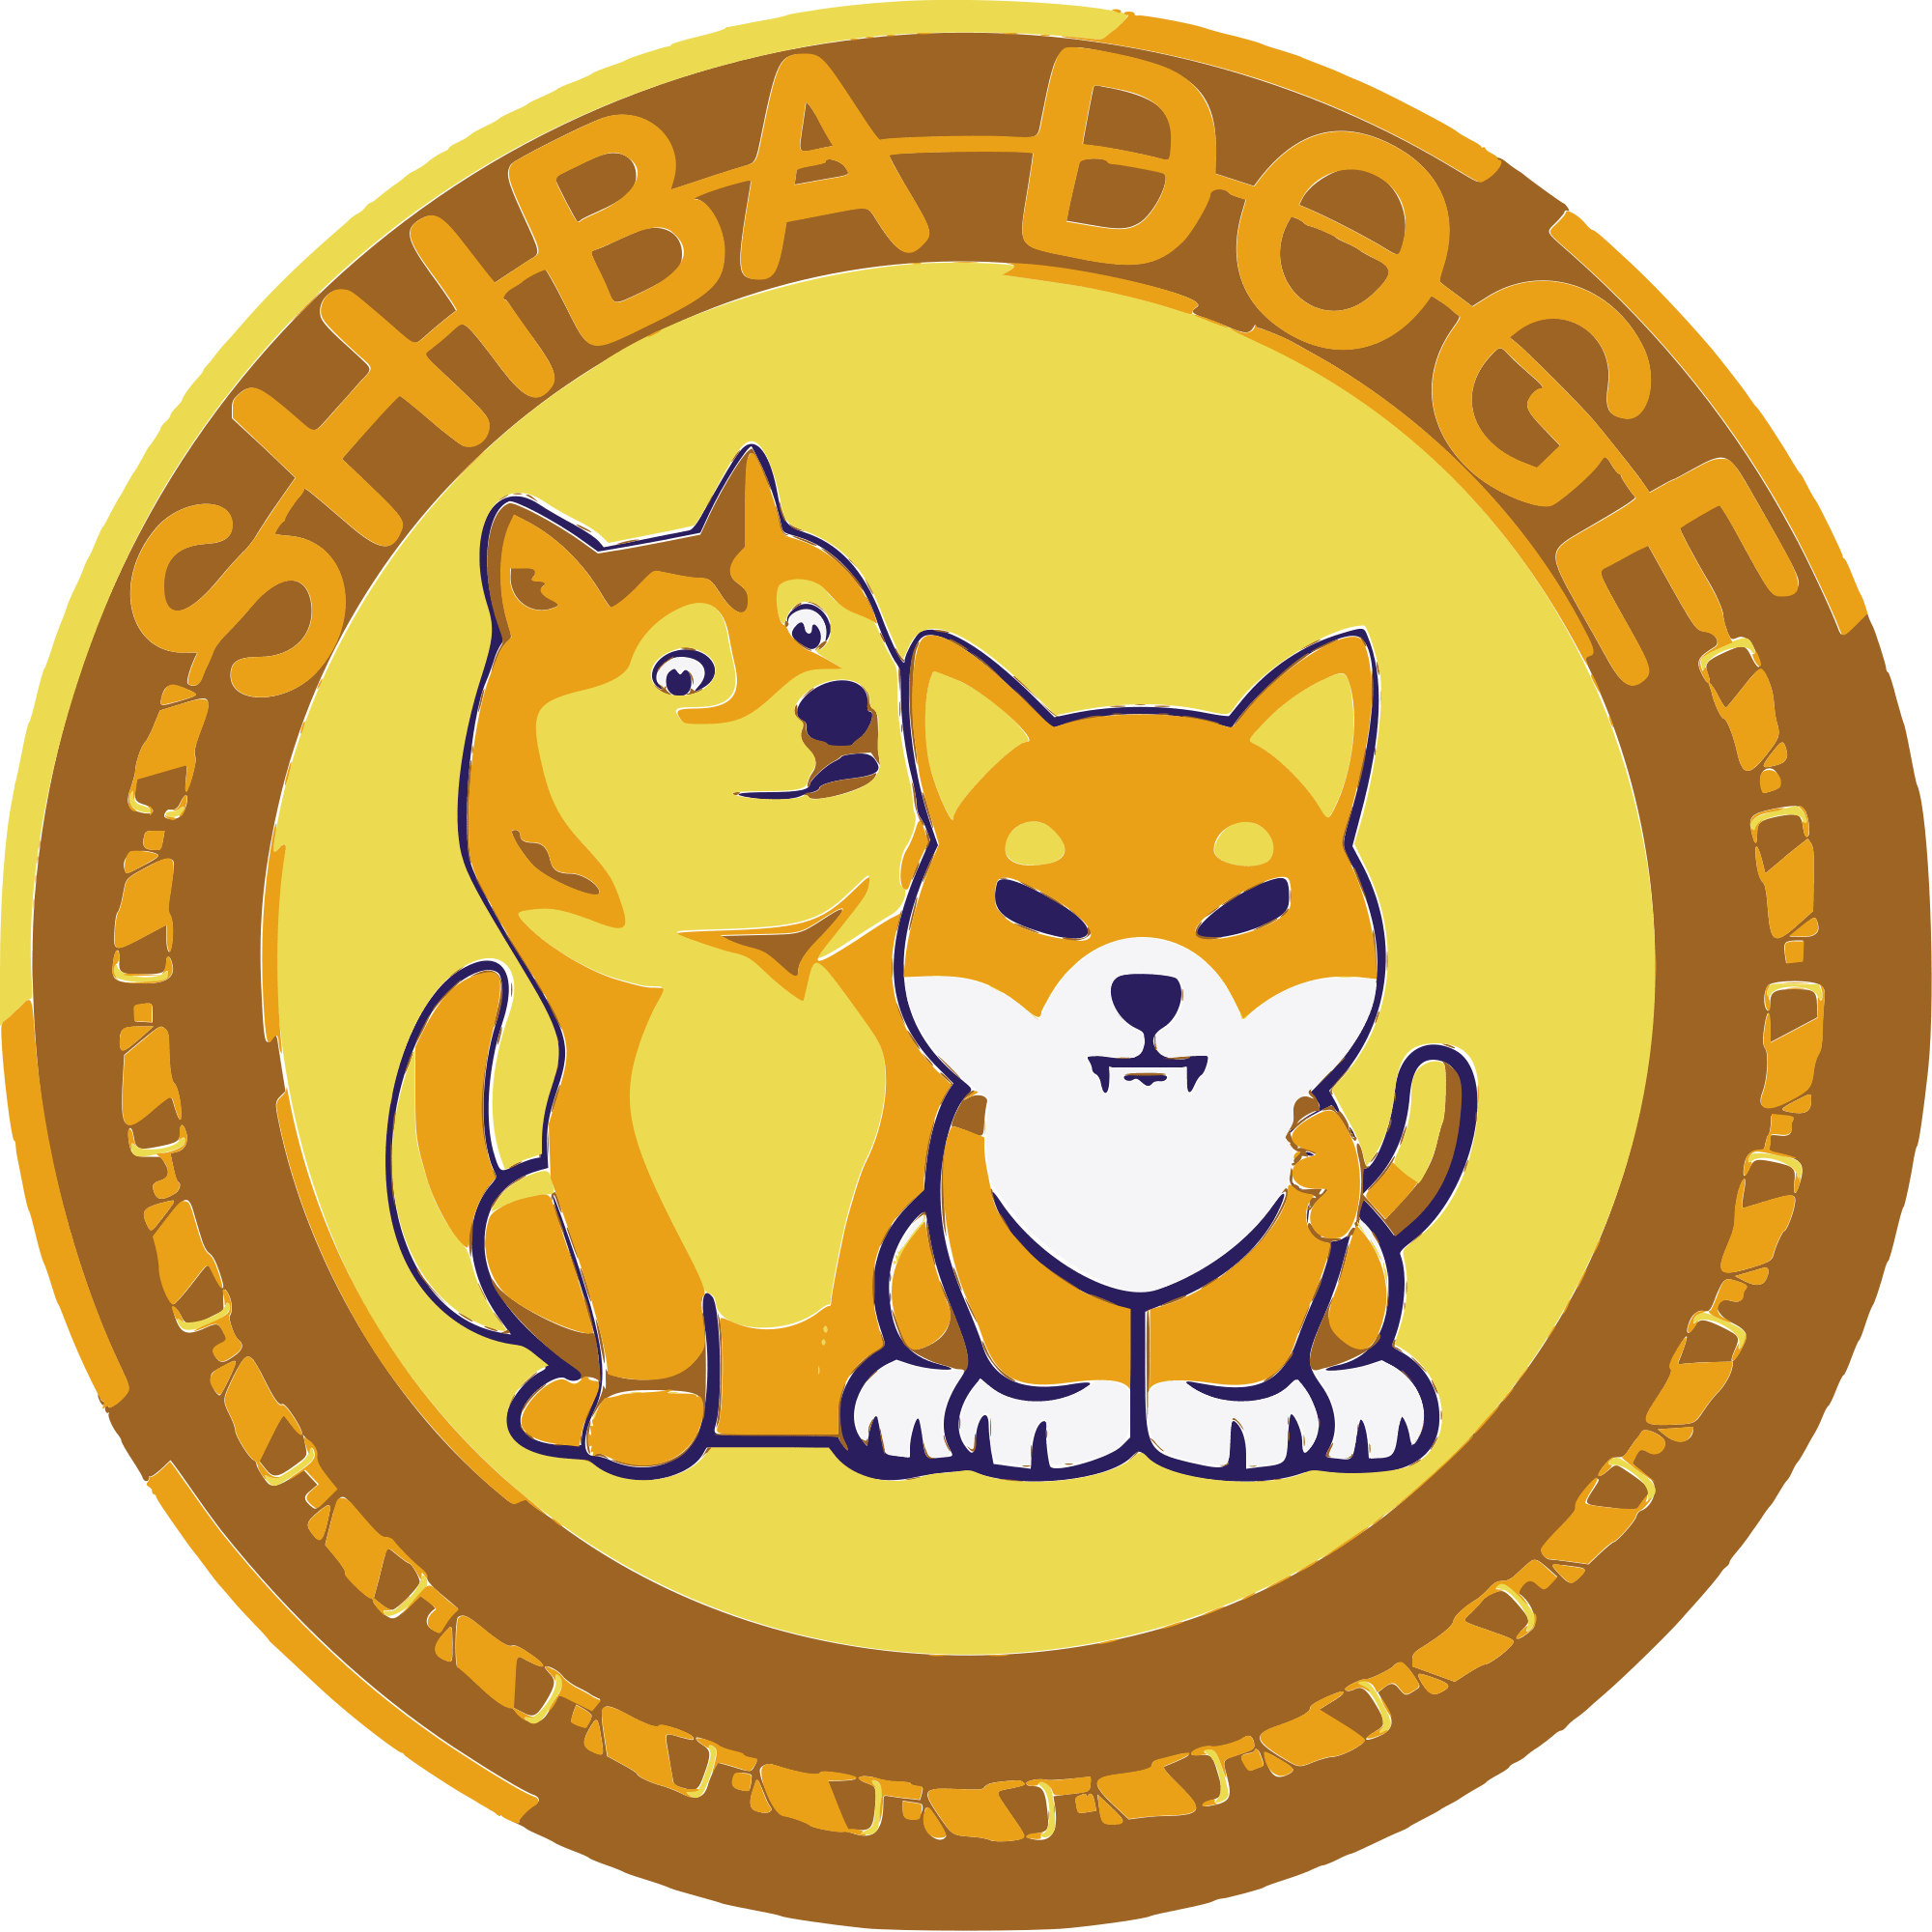 ShibaDoge logo in png format